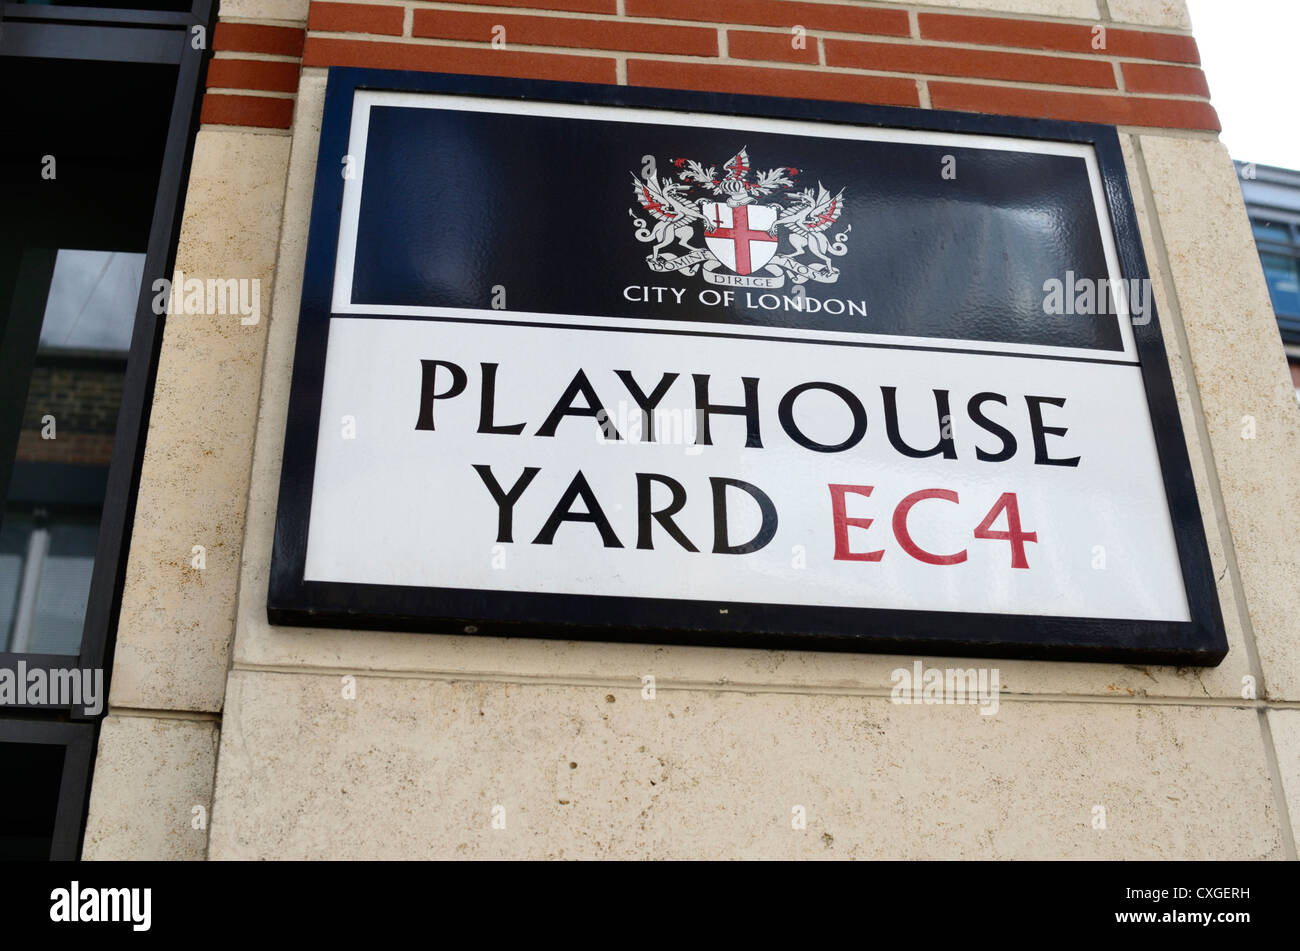 Playhouse Yard EC4 street sign, The City, London, England Stock Photo